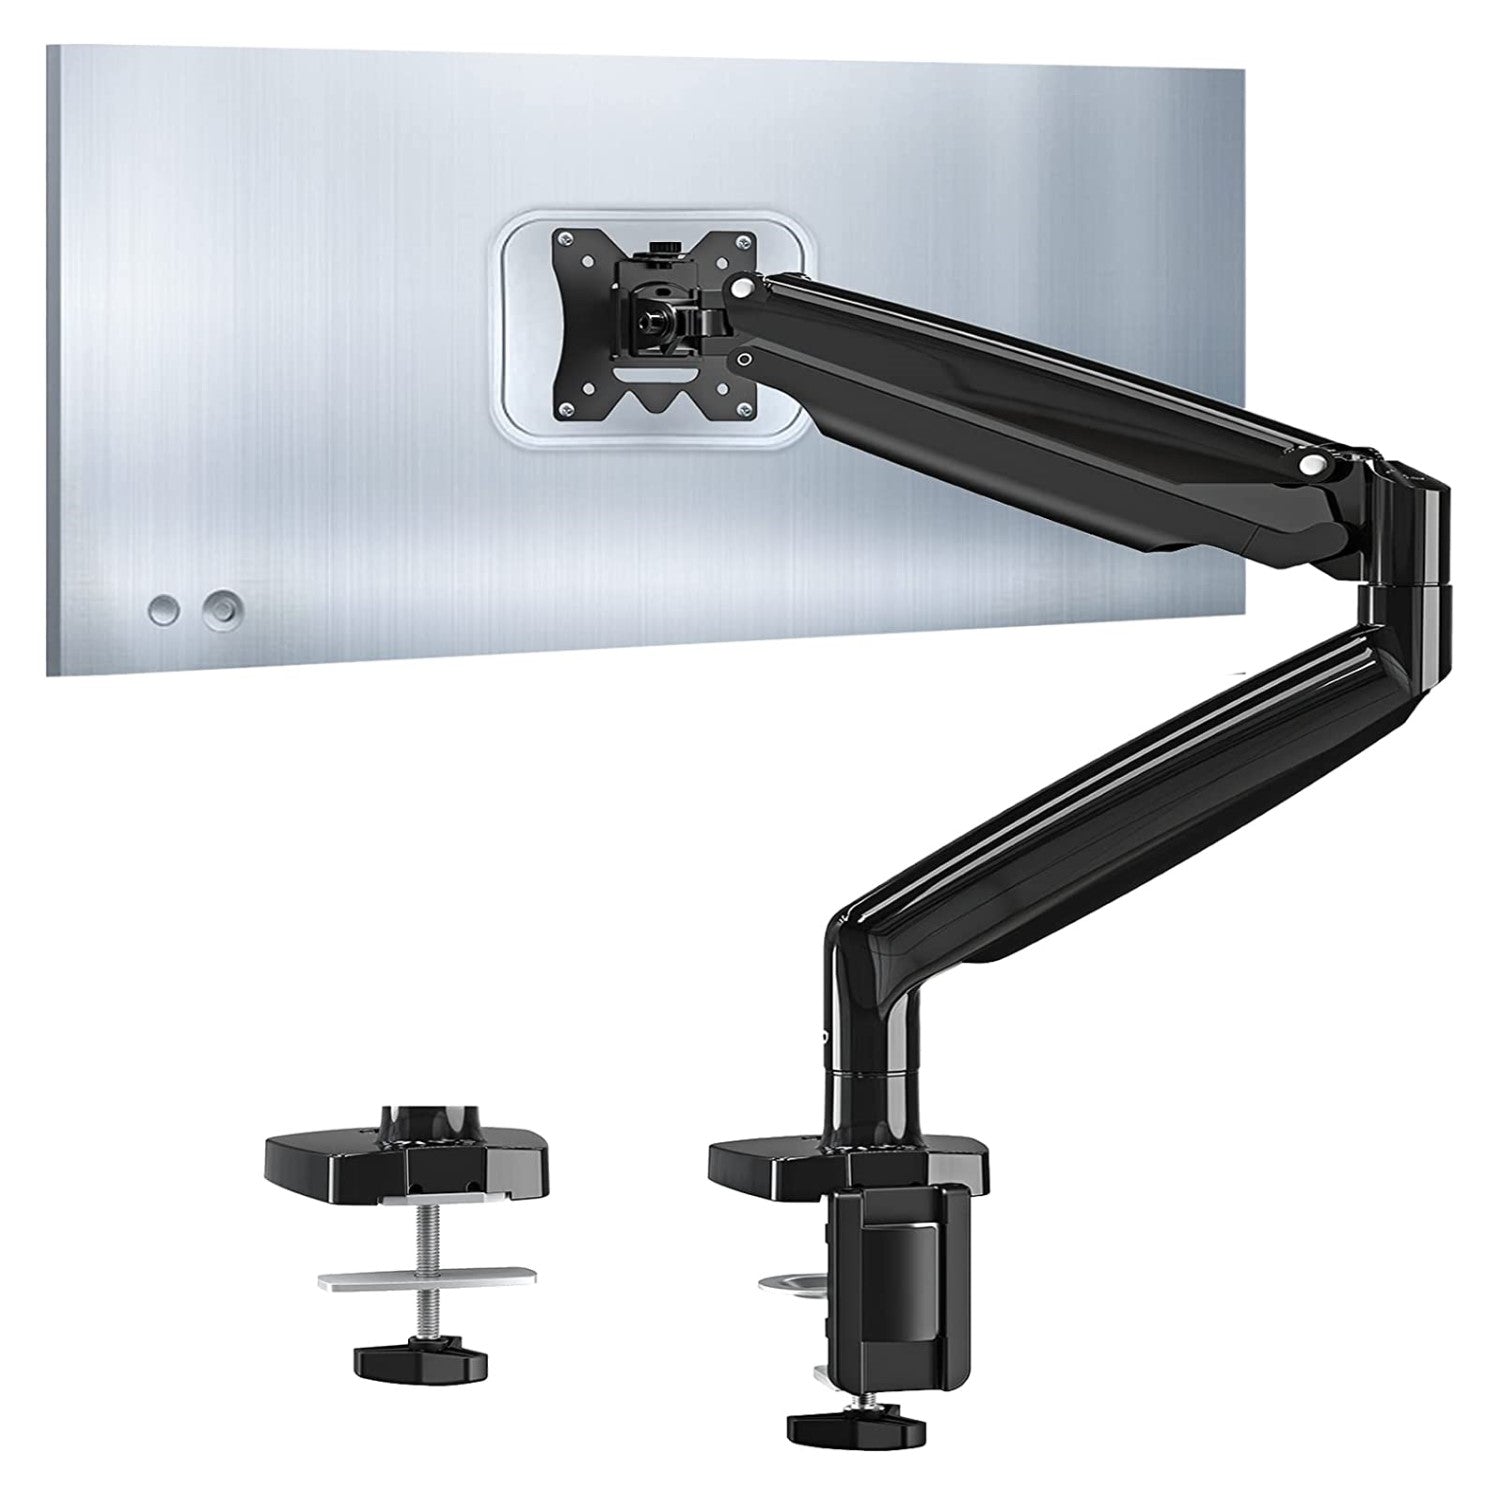  HILLPORT Monitor Desk Mount Stand Arm Single 17-30